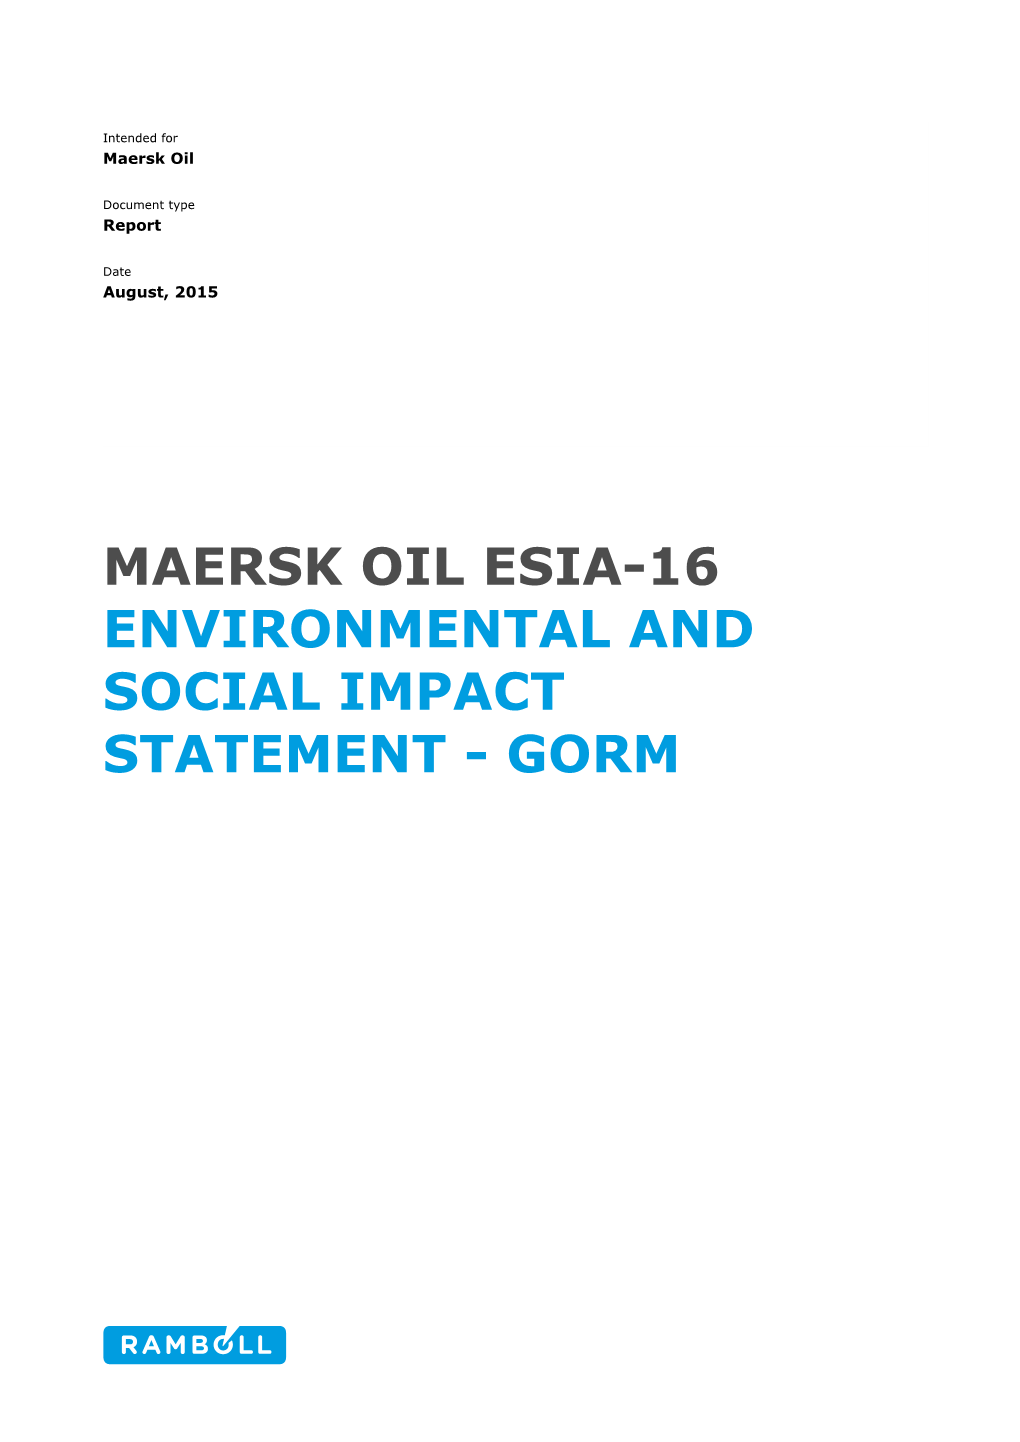 Maersk Oil Esia-16 Environmental and Social Impact Statement - Gorm